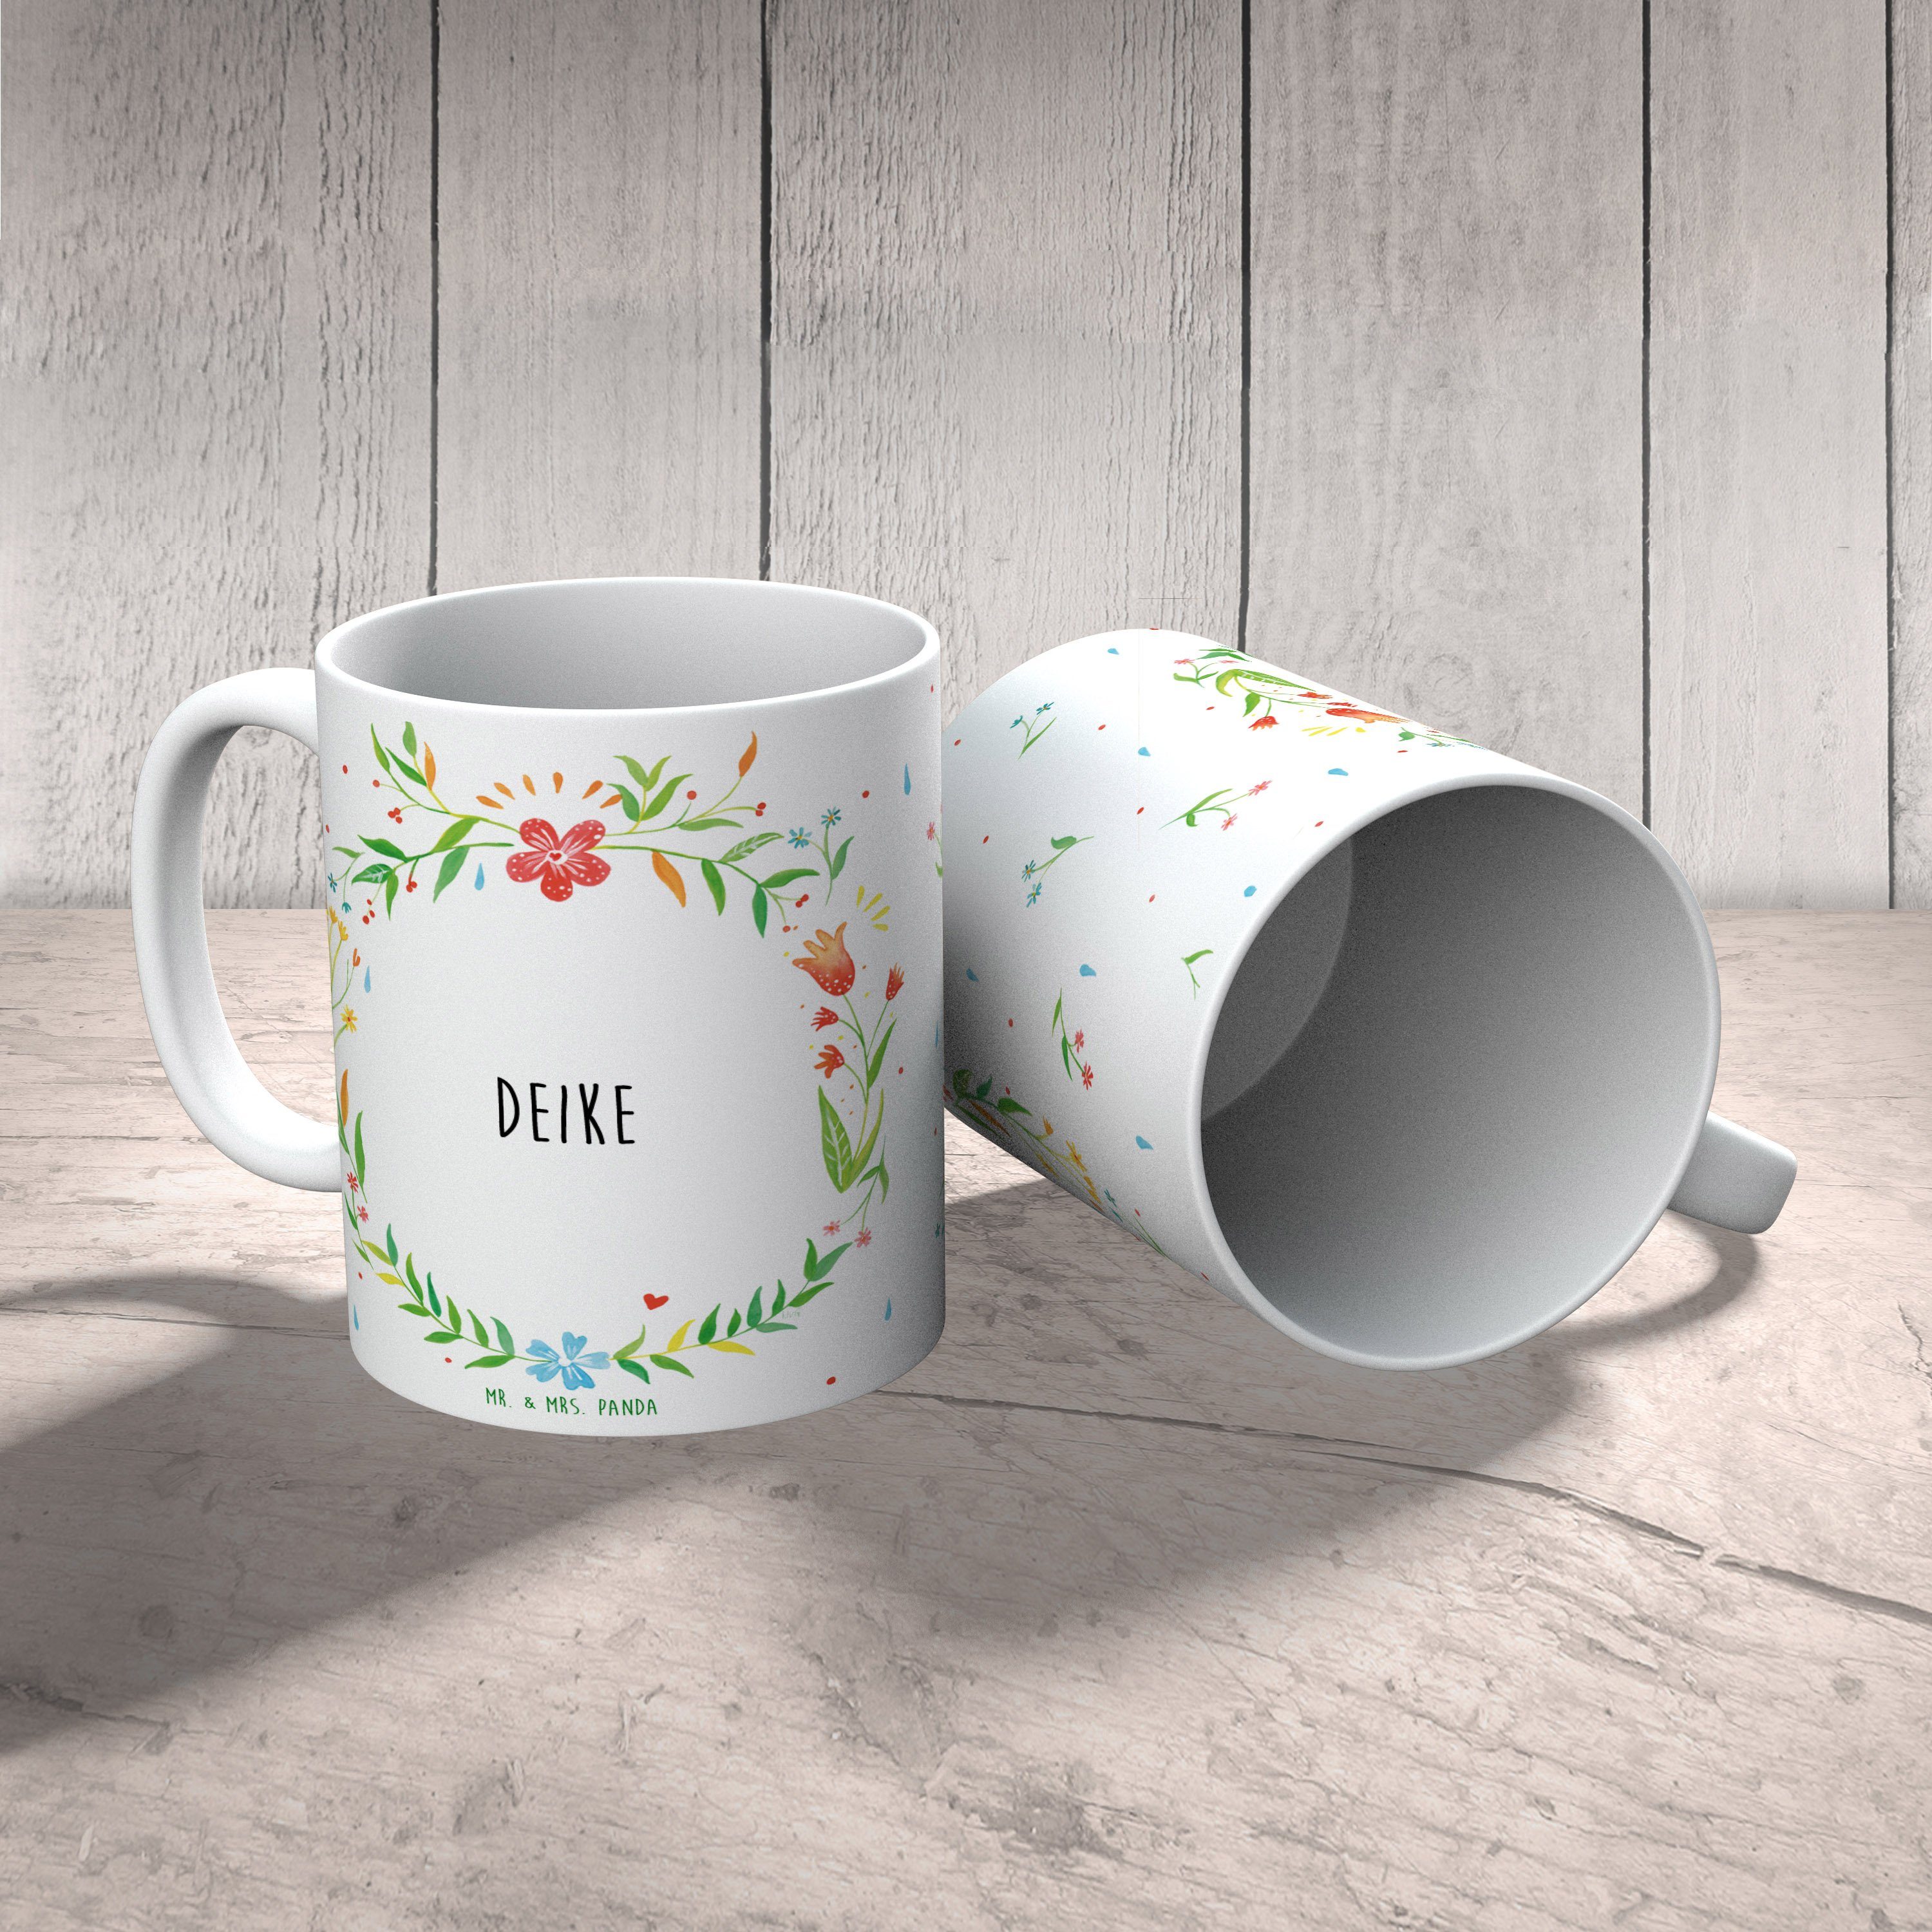 Mr. & Mrs. Panda Tasse, Tasse, Motive, Tasse Sprüche, - Kaf, Geschenk, Deike Tasse Tasse Büro Keramik